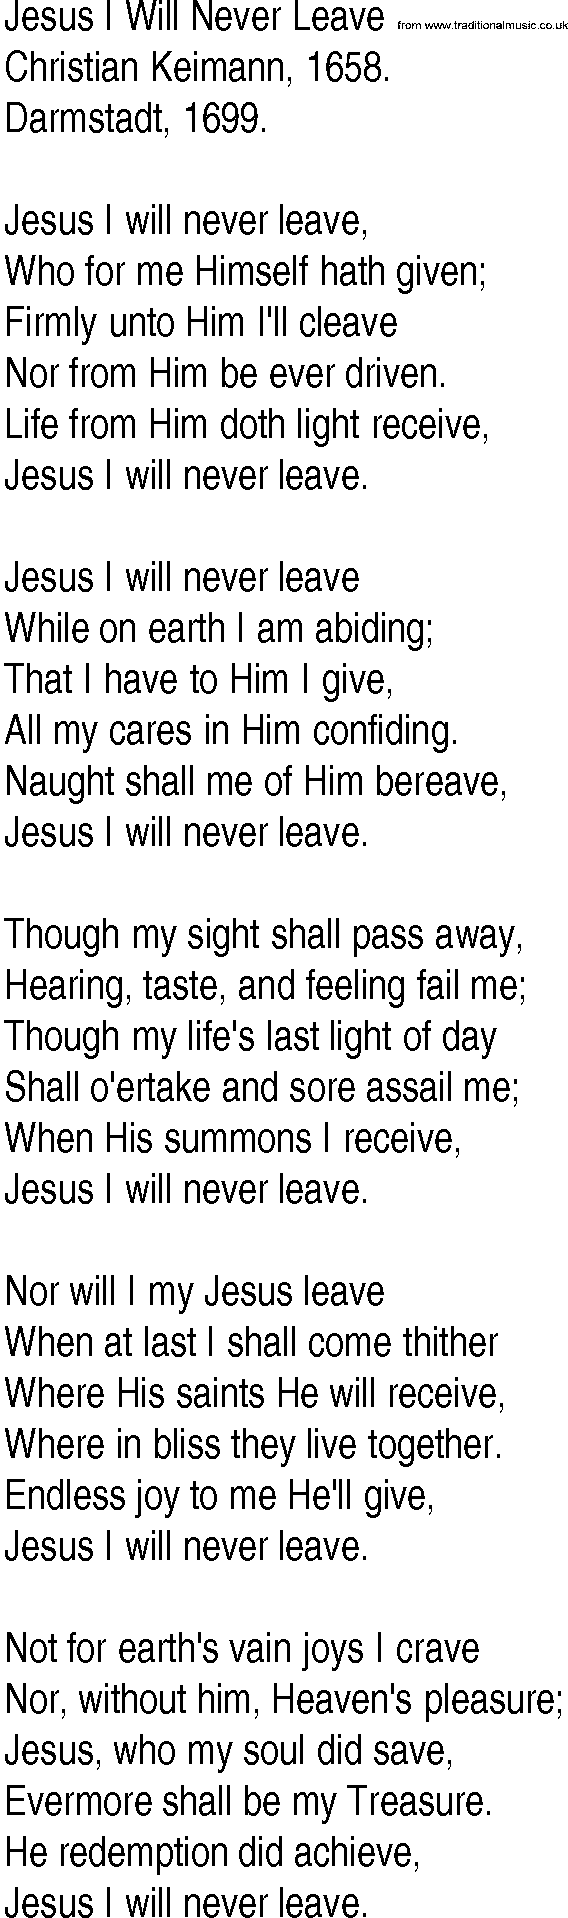 Hymn and Gospel Song: Jesus I Will Never Leave by Christian Keimann lyrics